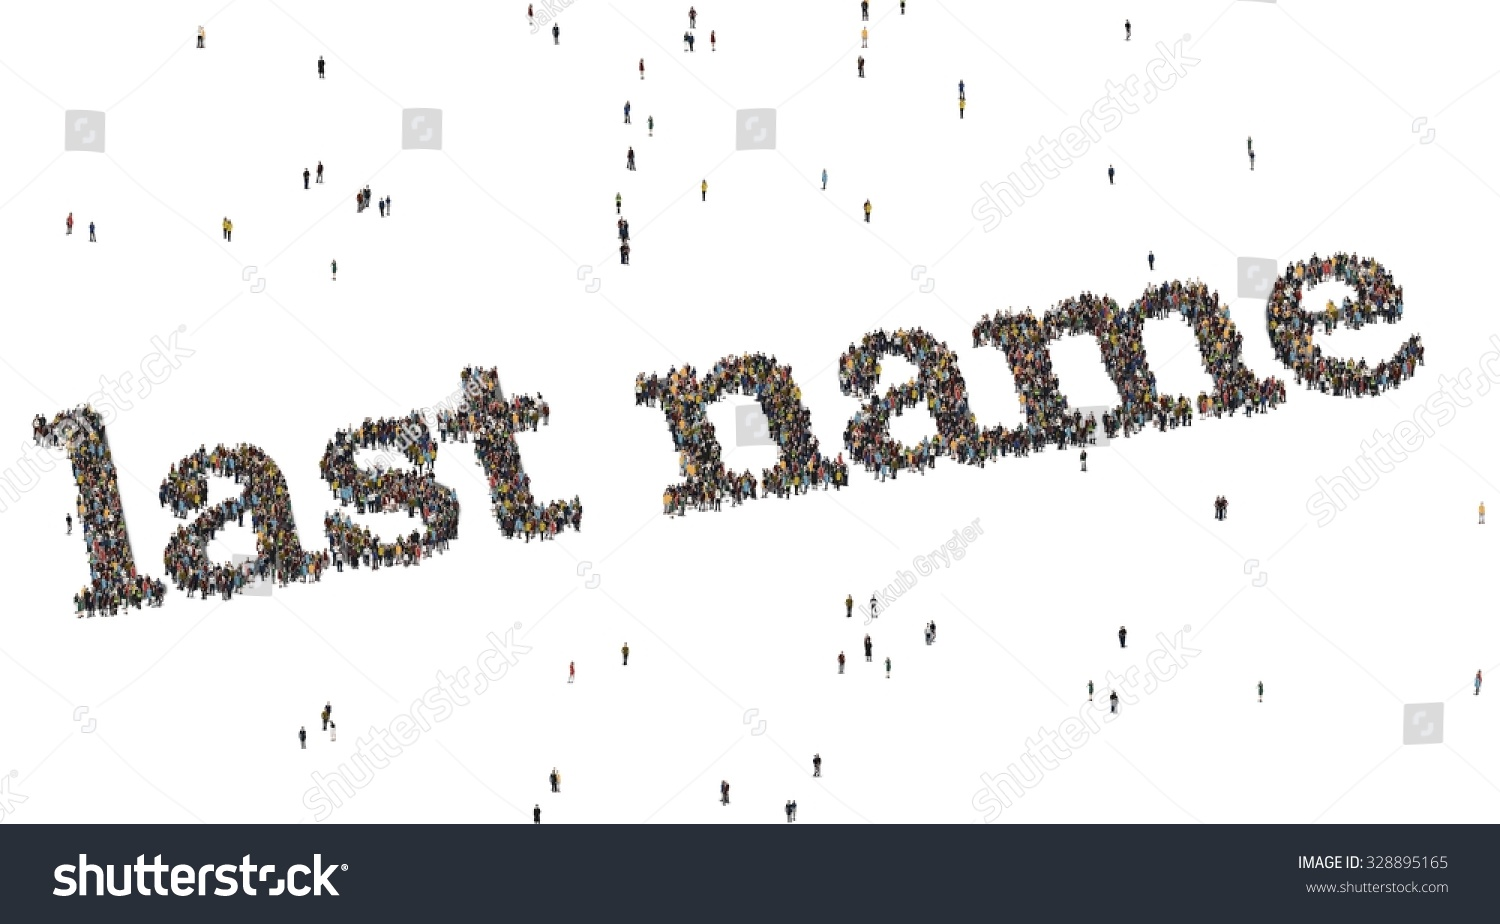 First Name và Last Name là gì